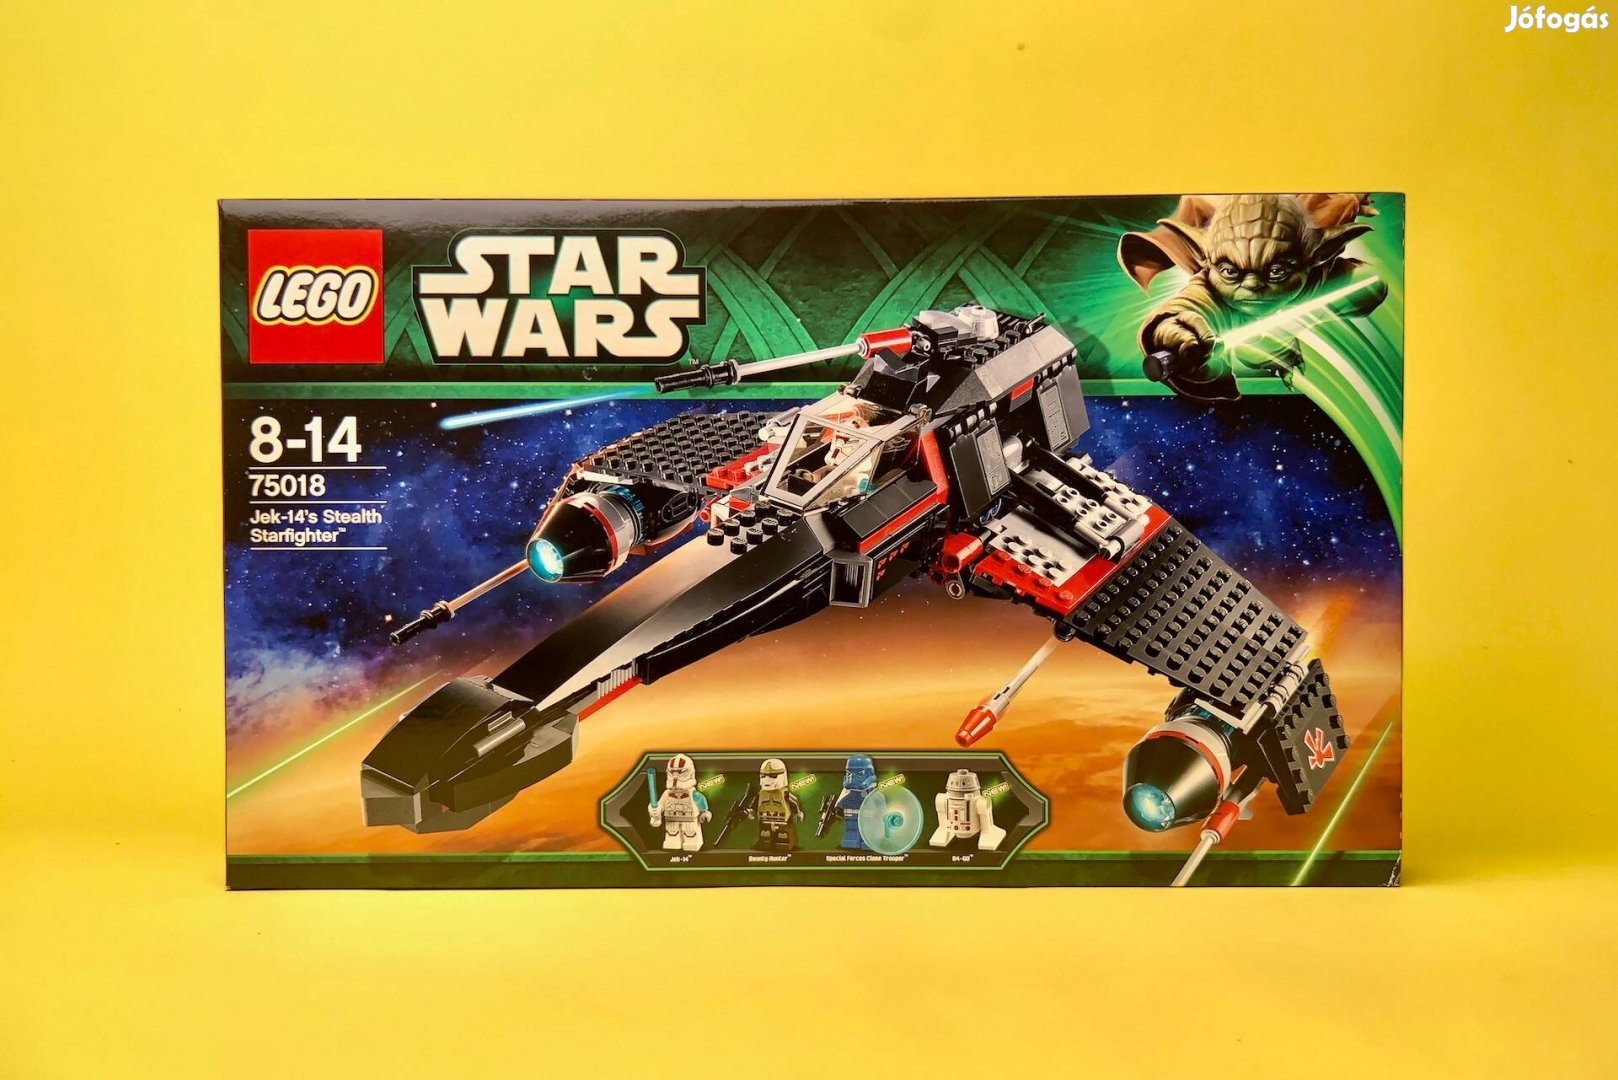 LEGO Star Wars 75018 Jek-14 lopakodó csillagharcos, Uj, Bontatlan